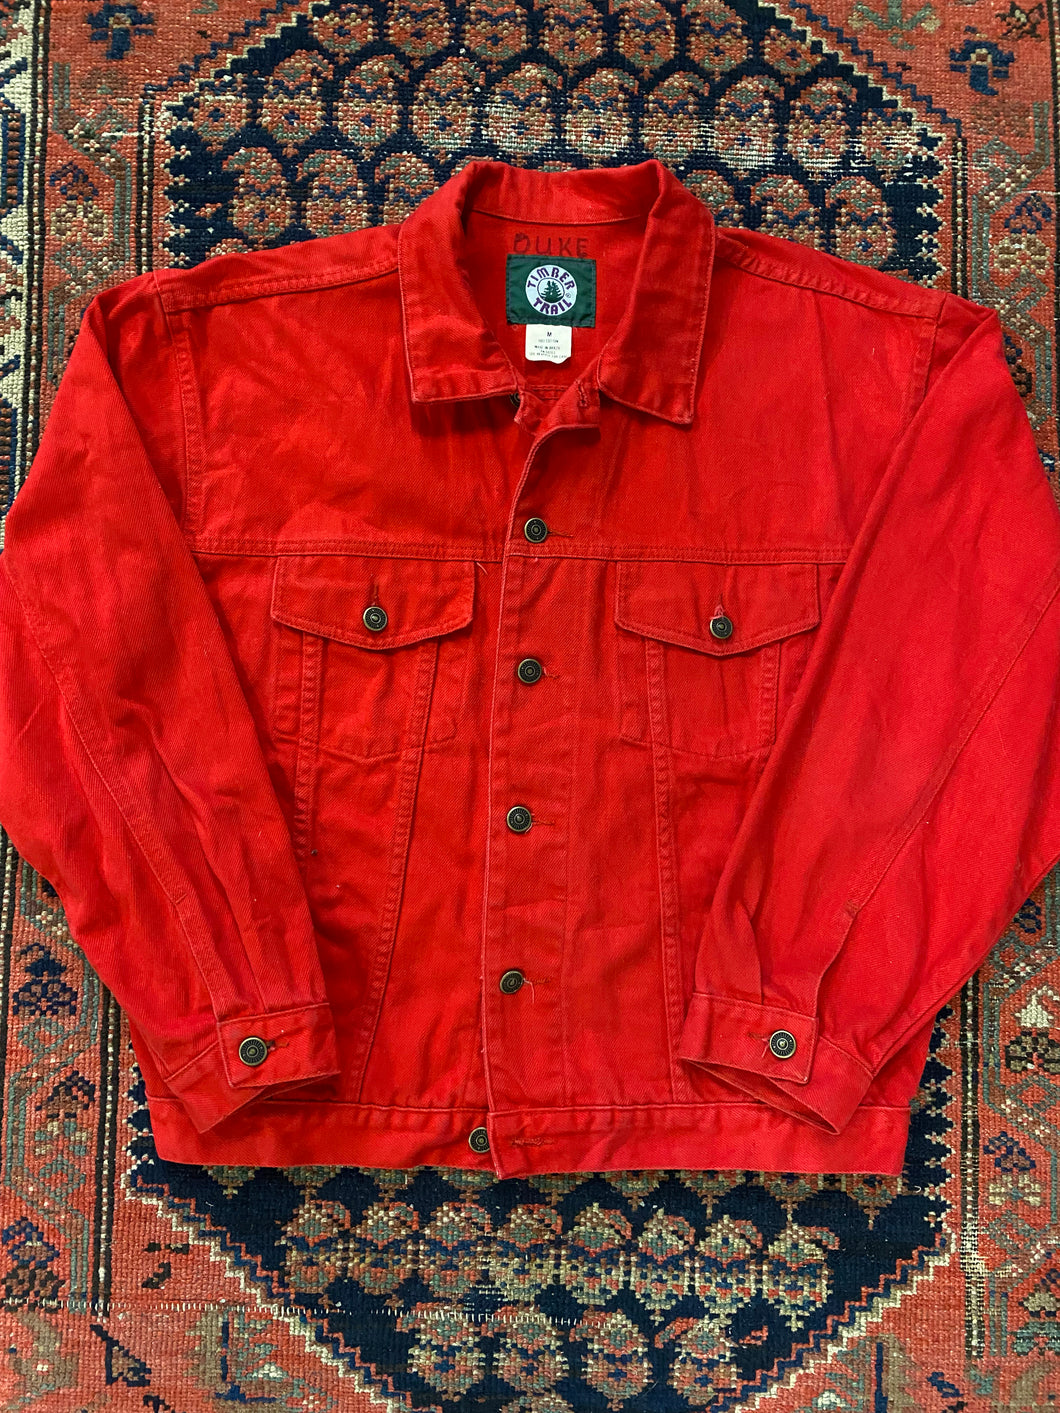 Vintage Red Denim Jacket - M